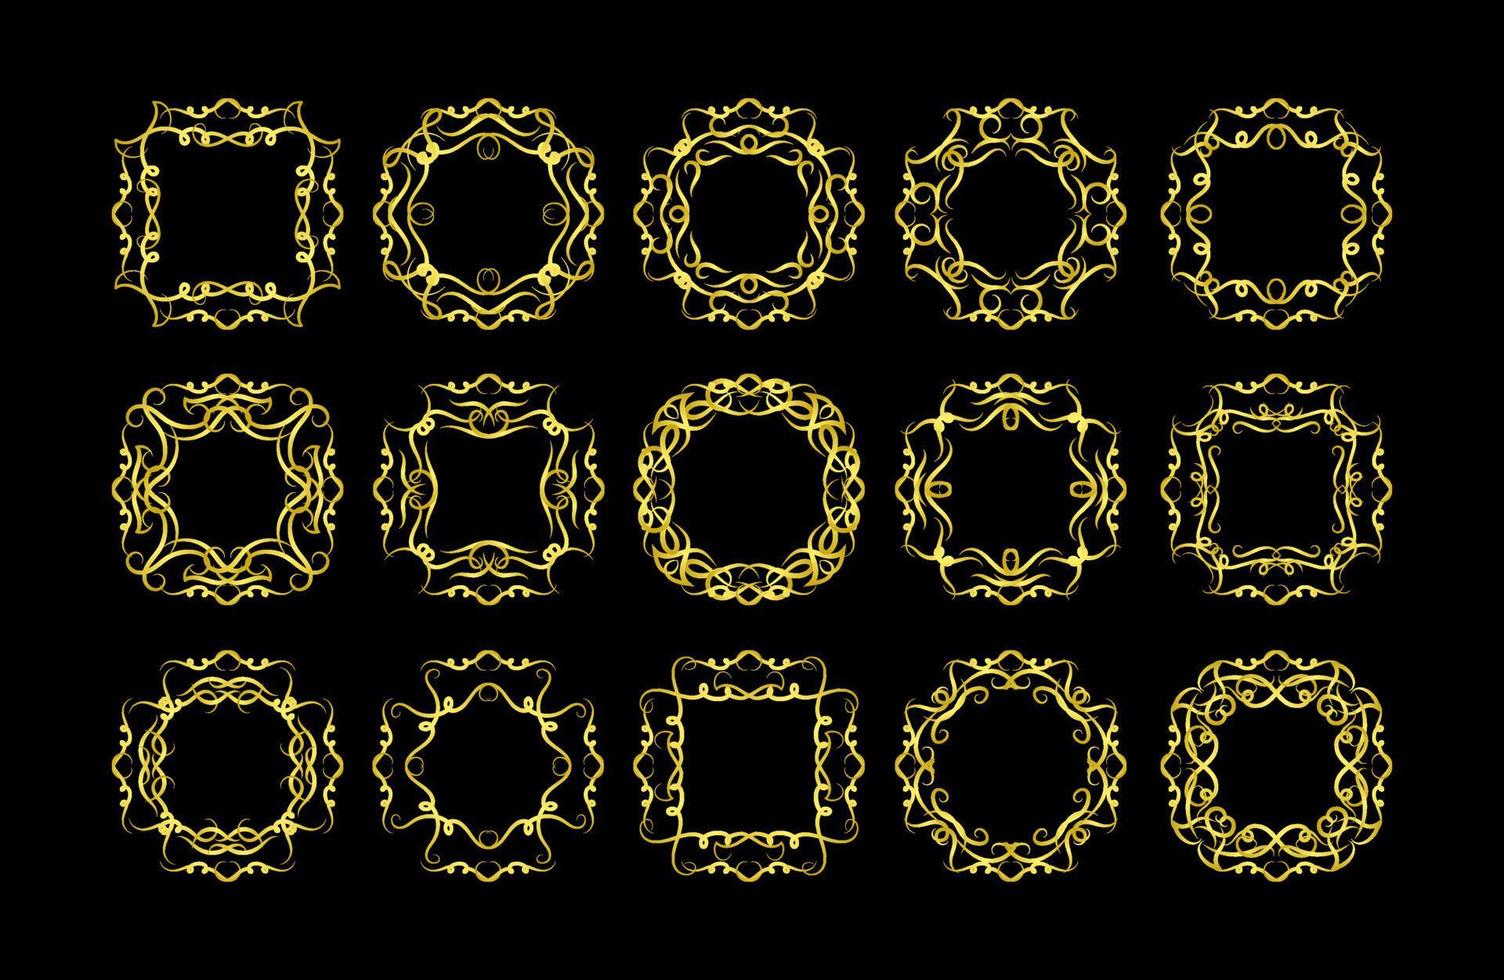 Colección de elementos de bordes dorados, vector de adorno